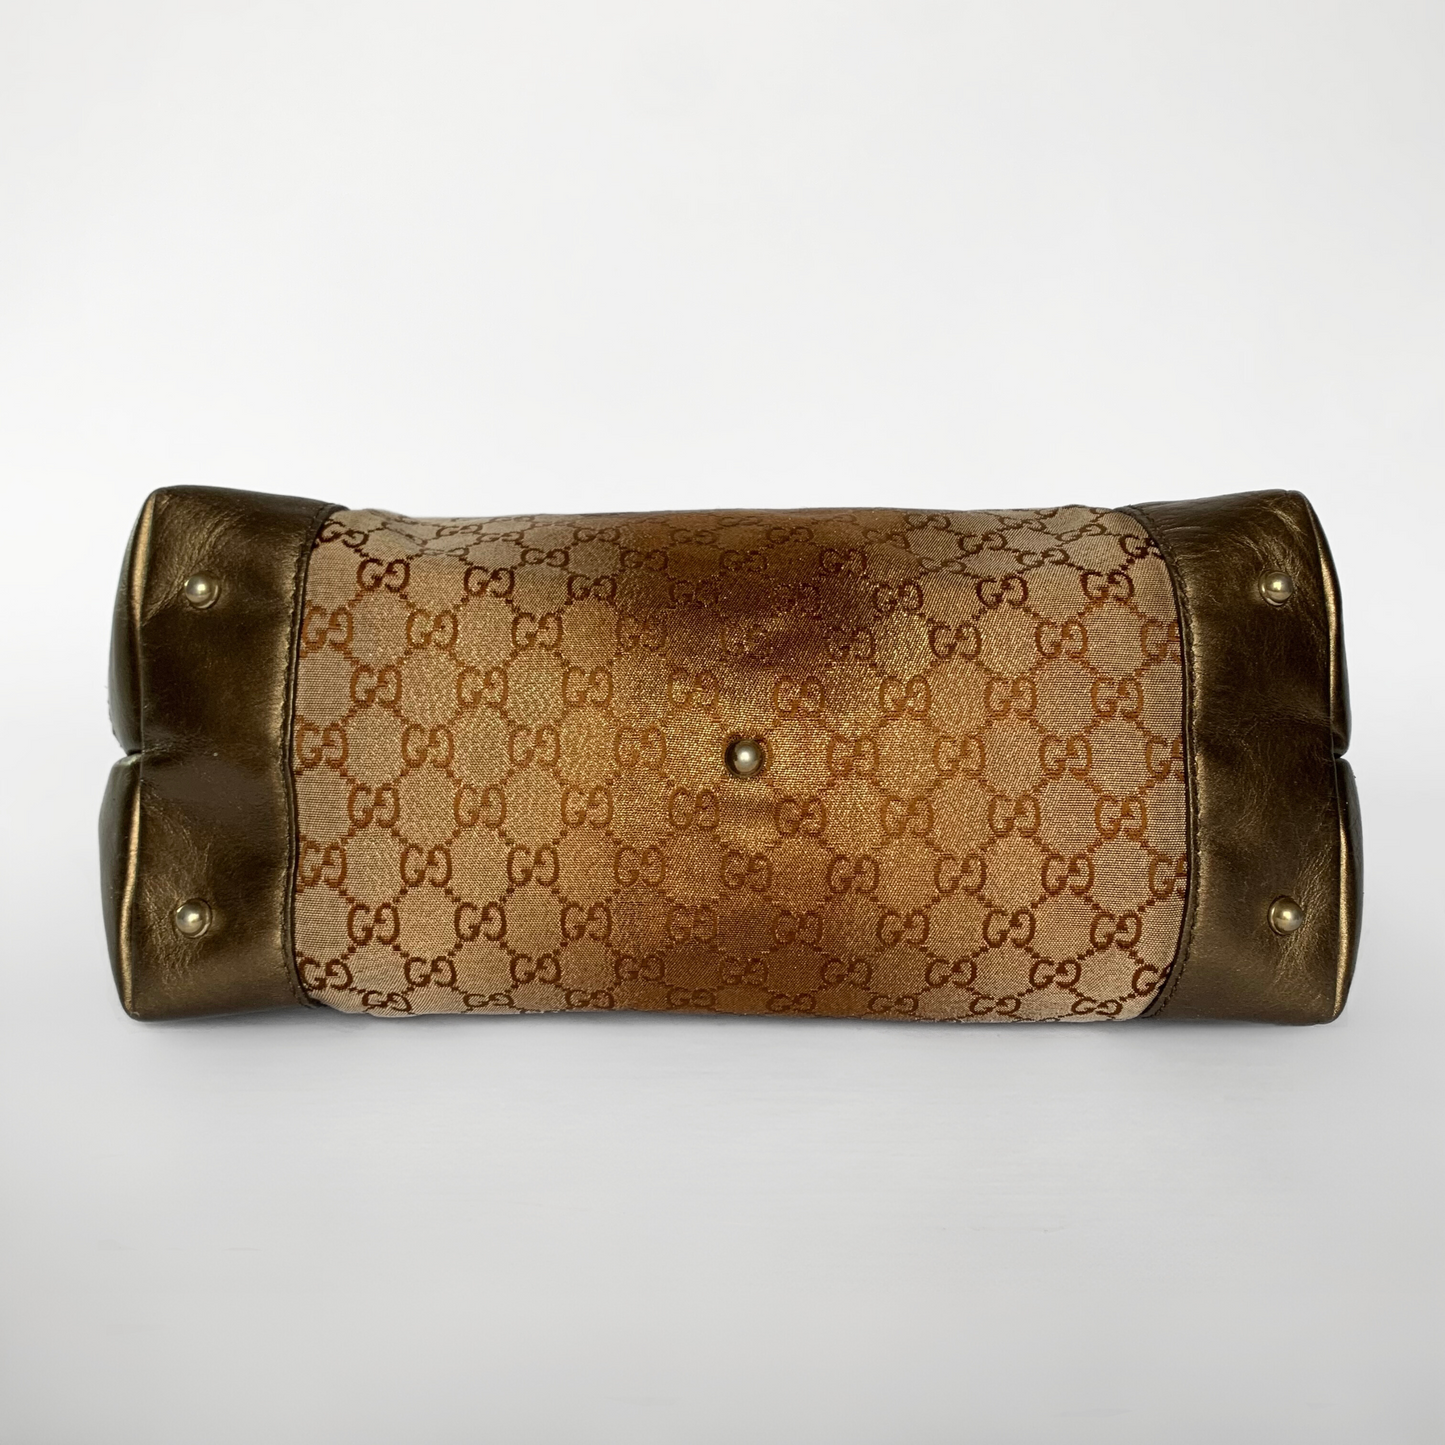 Gucci Gucci Tote Monogram Canvas - Τσάντα ώμου - Etoile Luxury Vintage